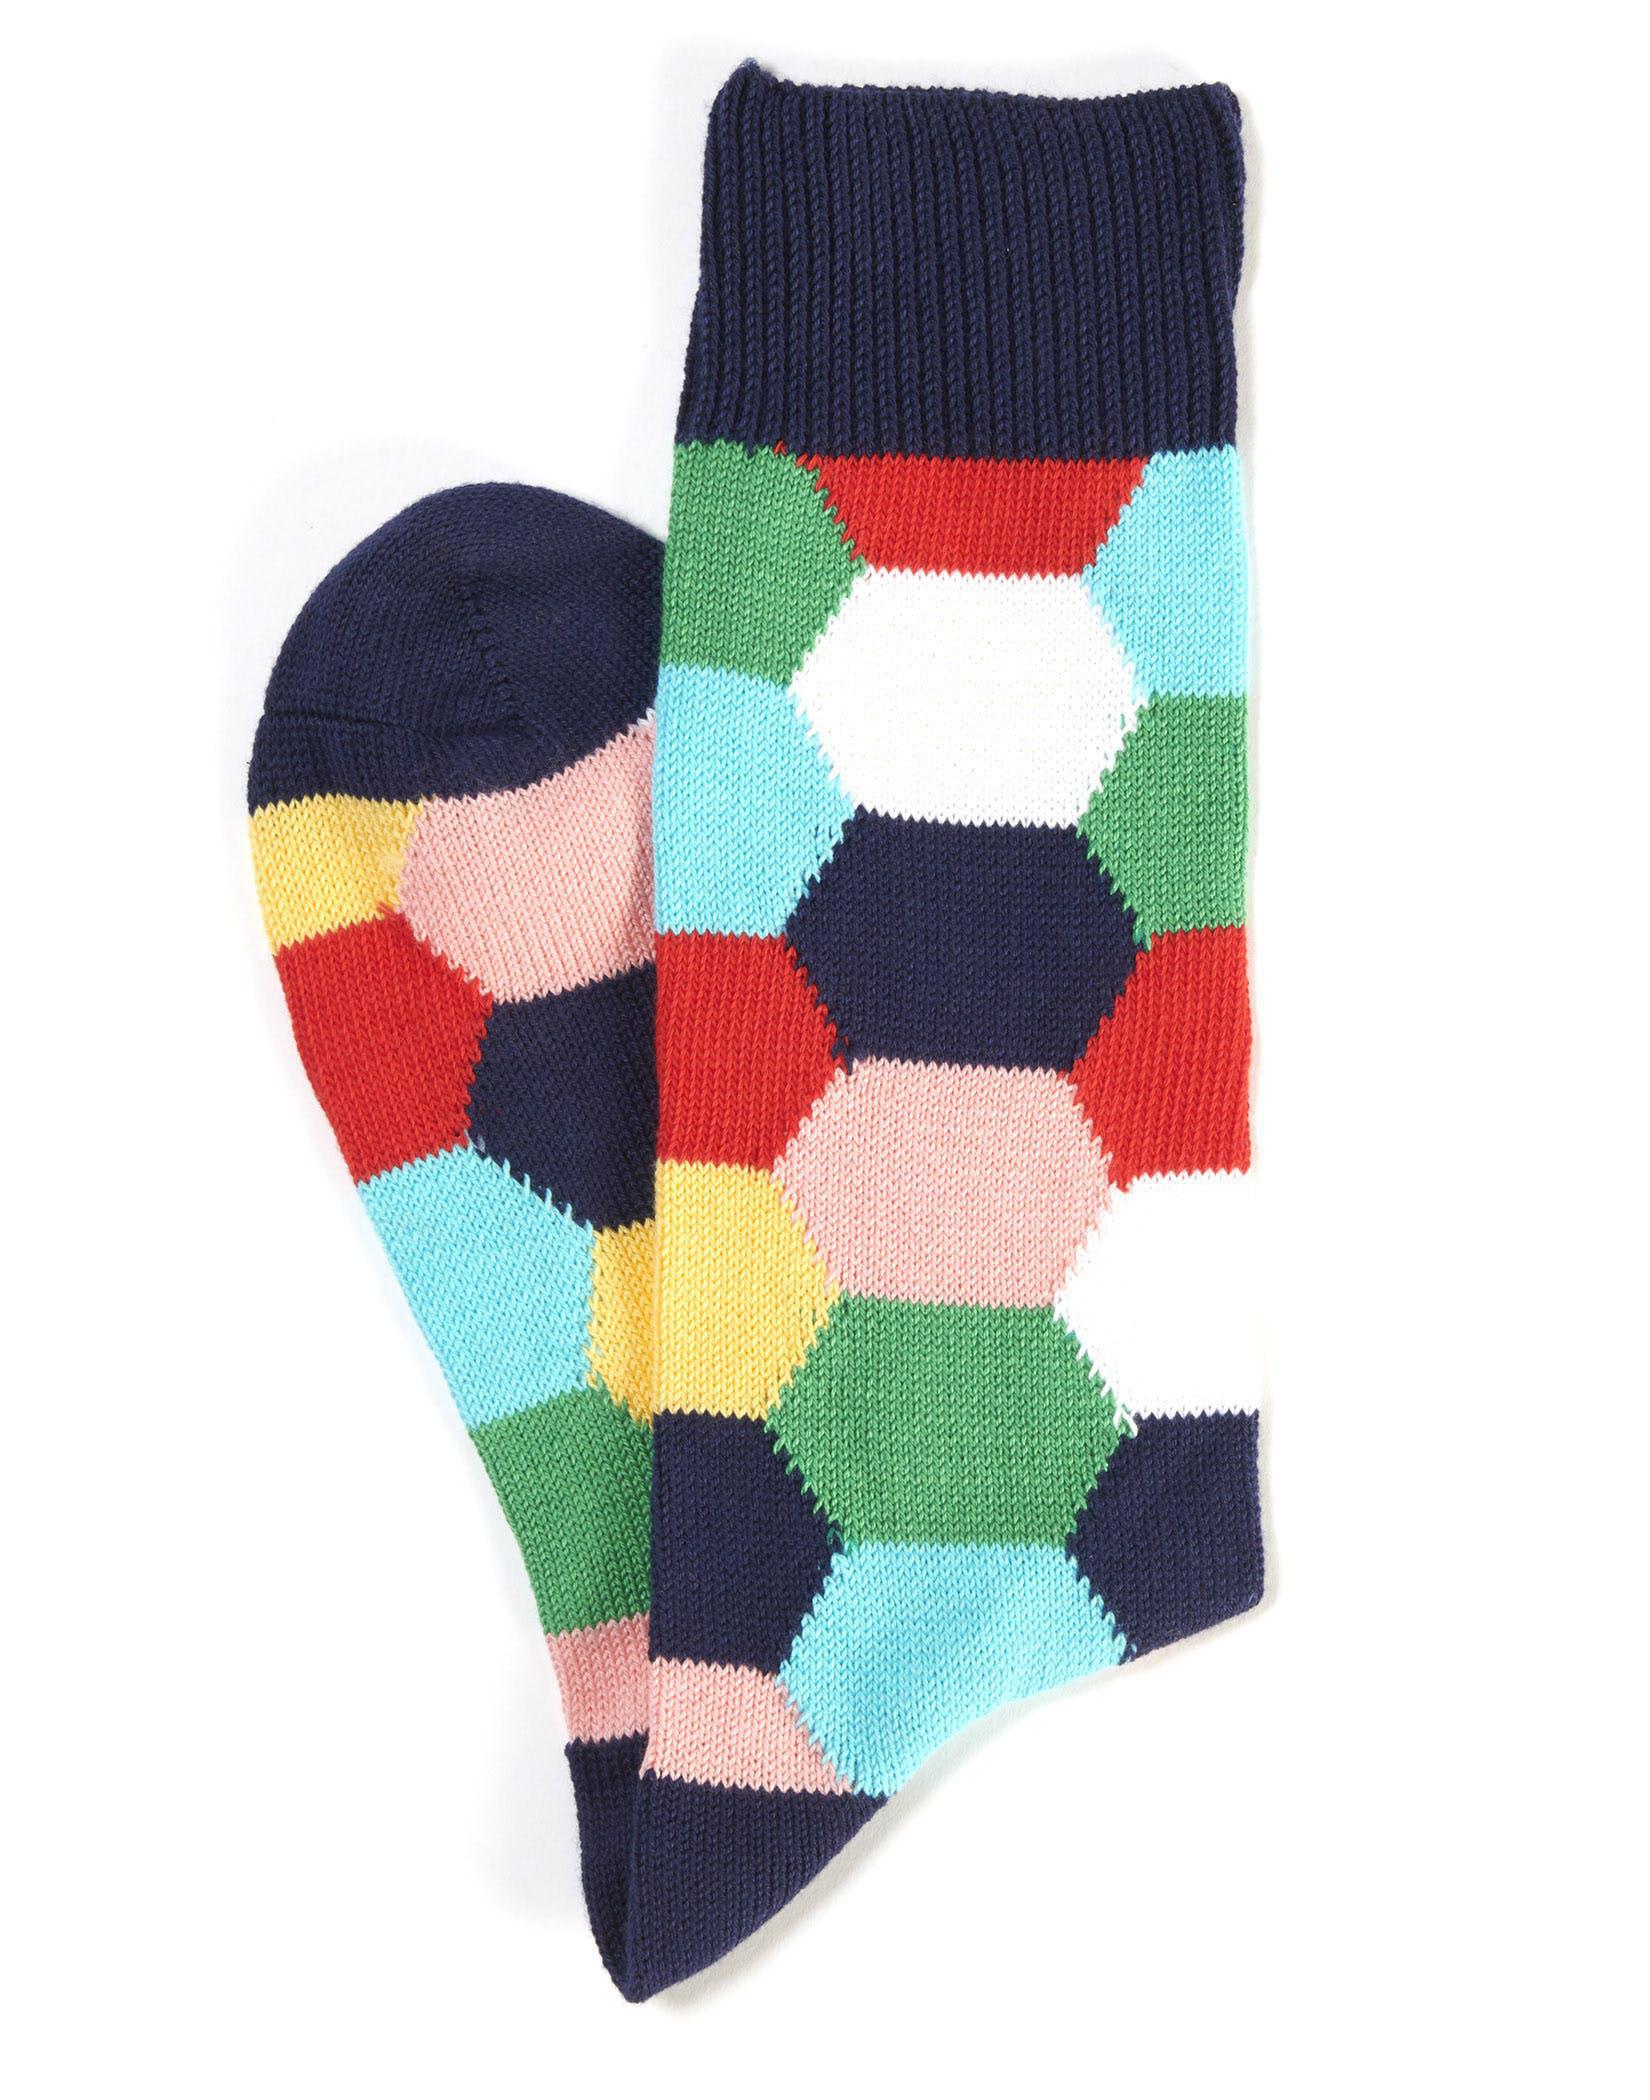 Hexagon Socks - Navy